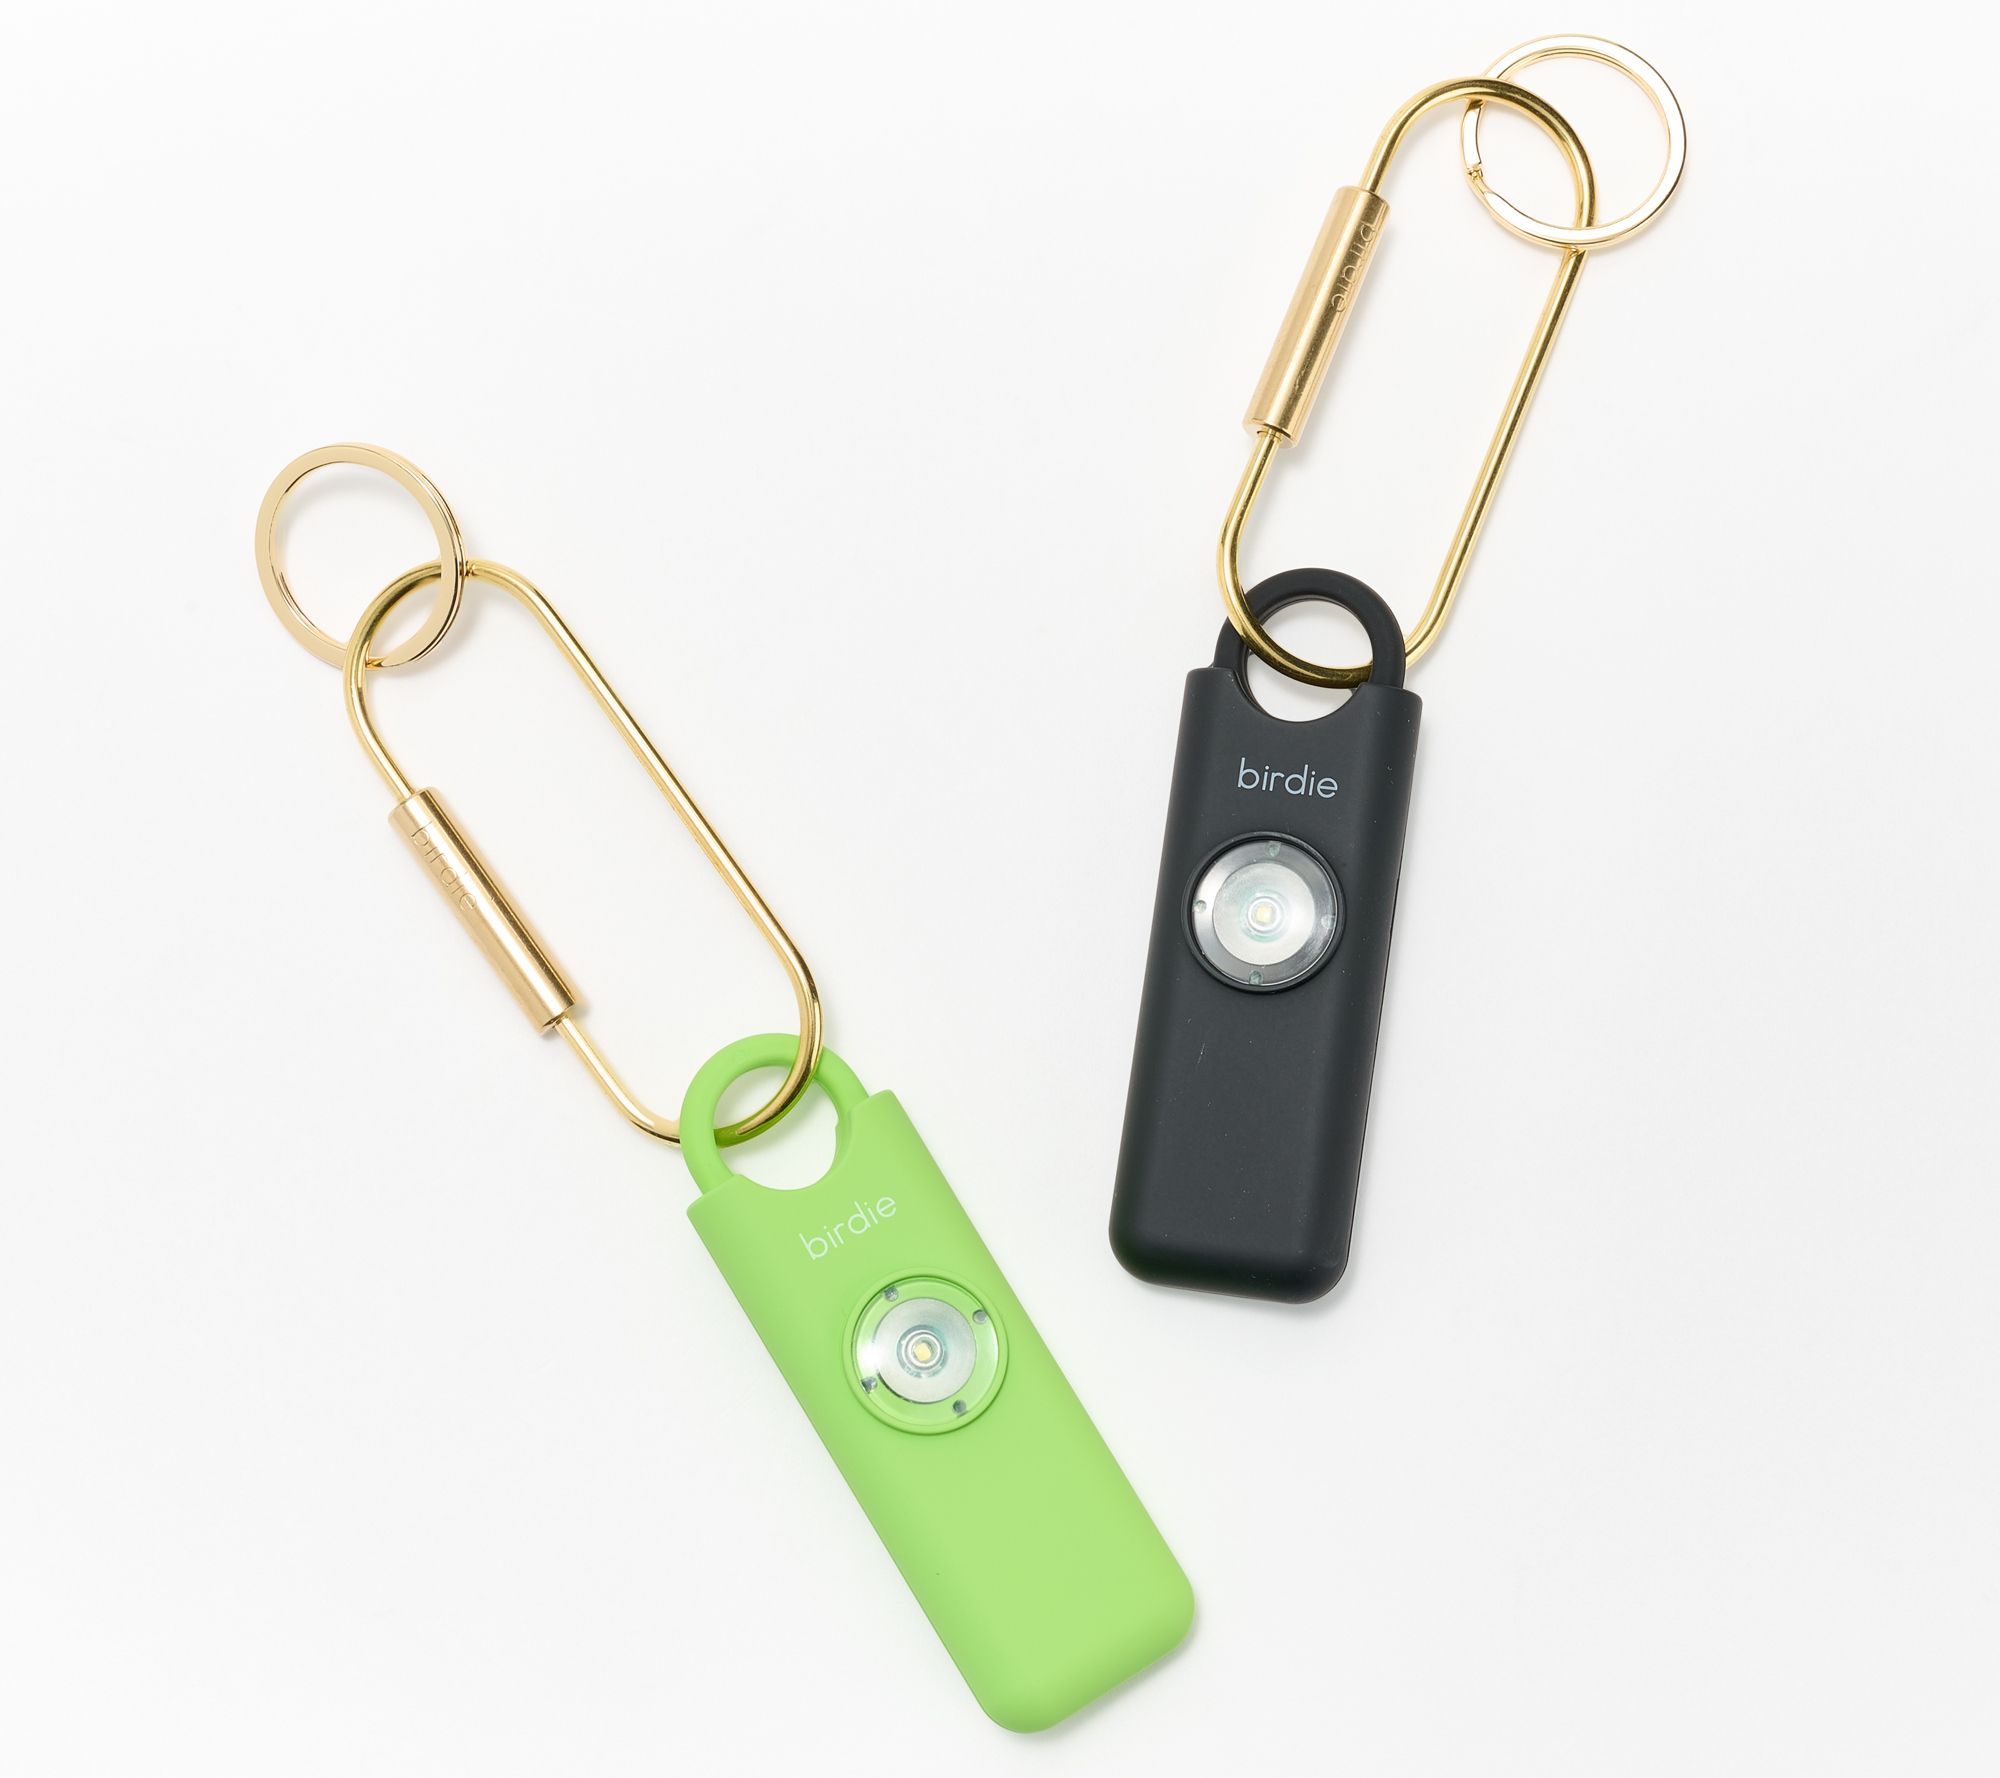 Luxury Designer Beaded Car Keychain Bracelet Portable House Key